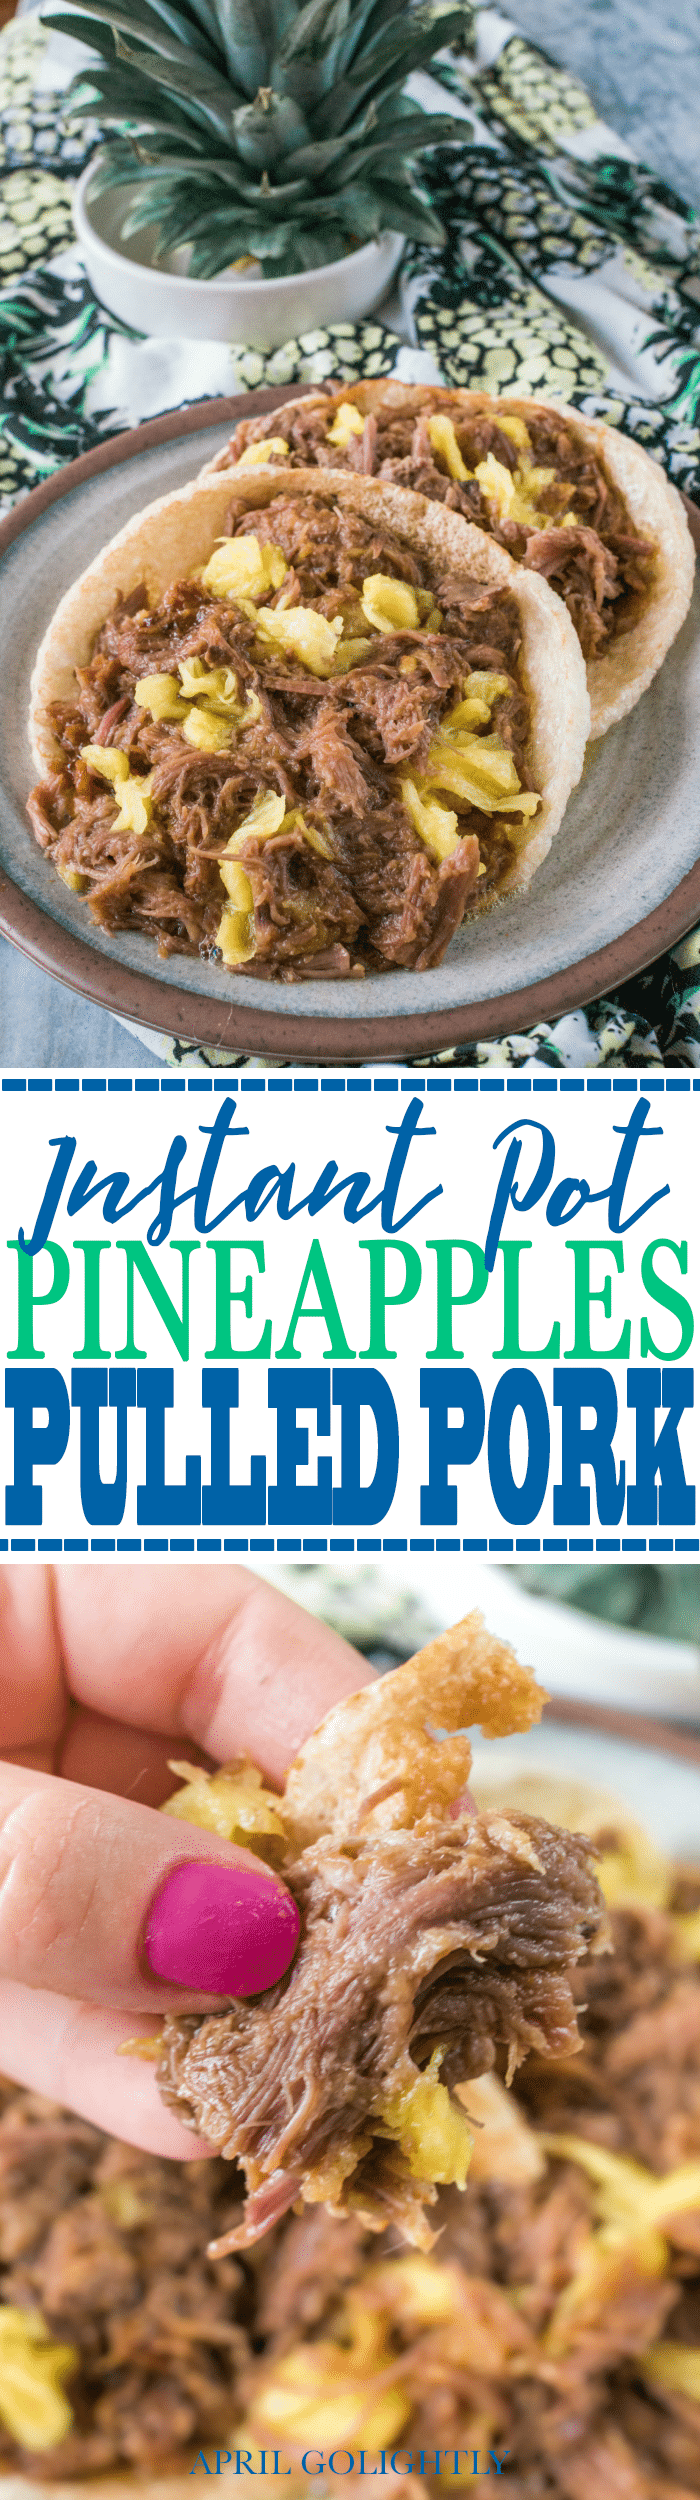 Instant Pot Pineapple Pulled Pork